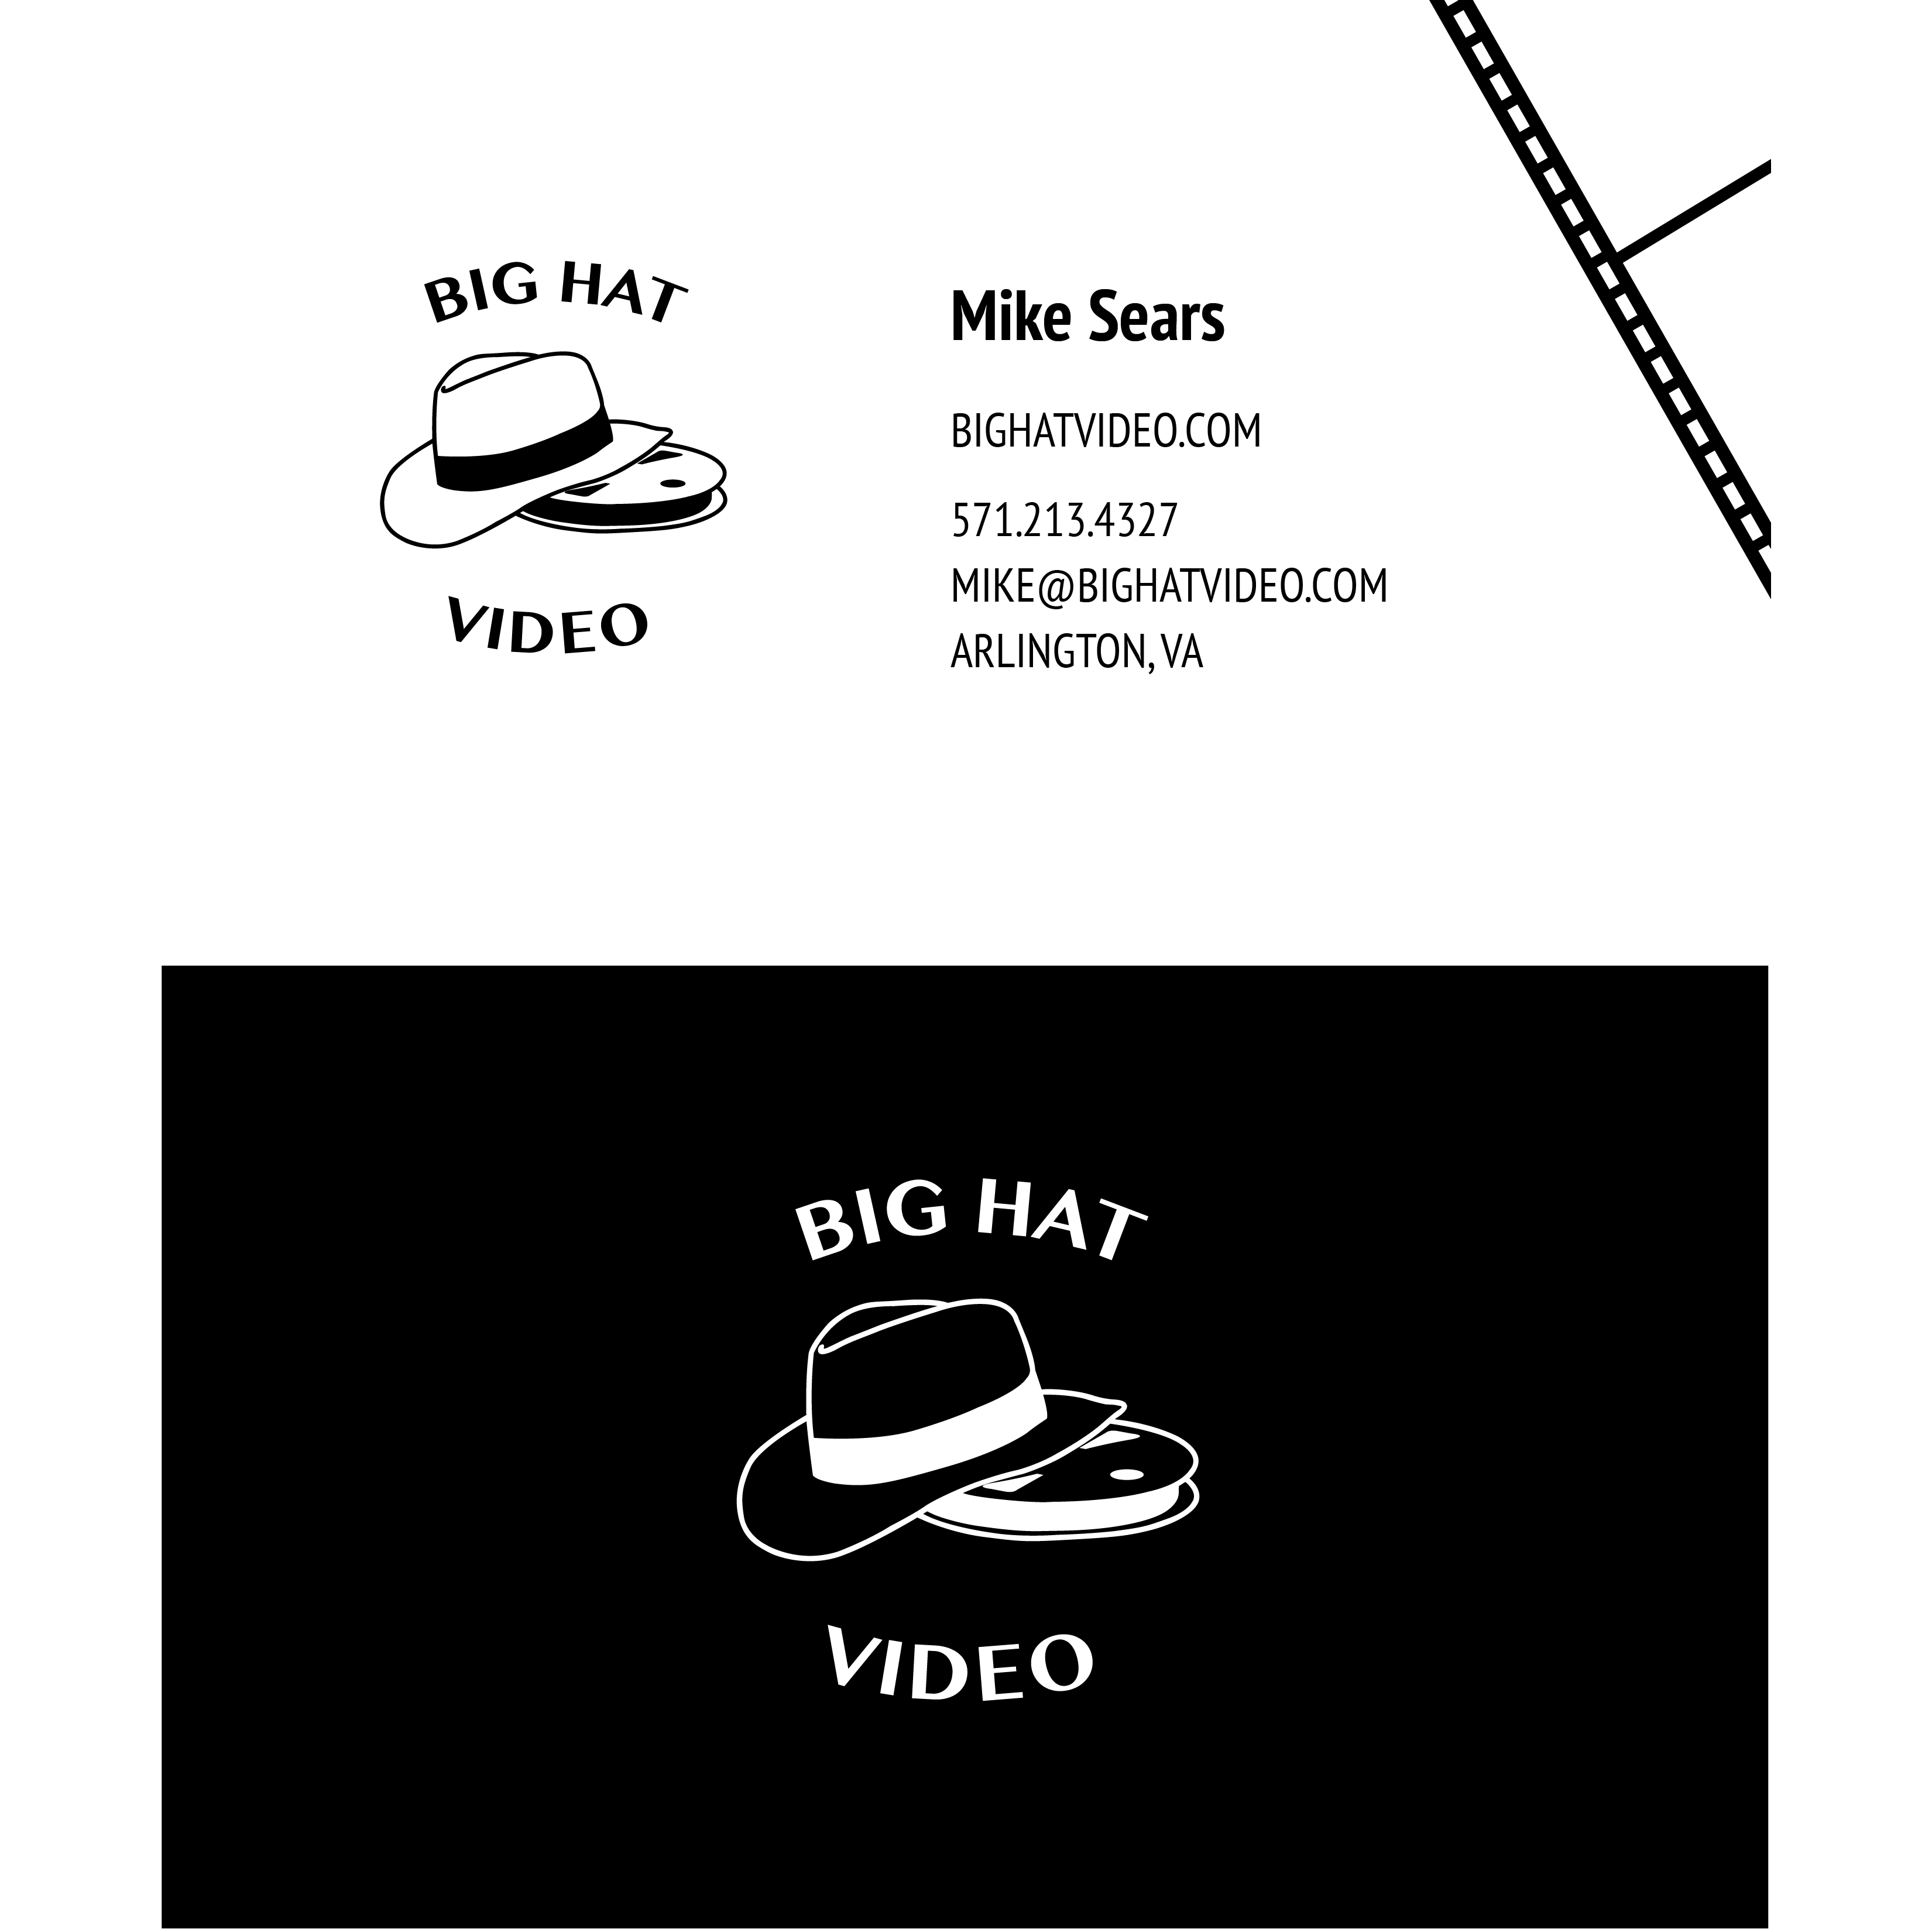 Big Hat Videos Business Cards